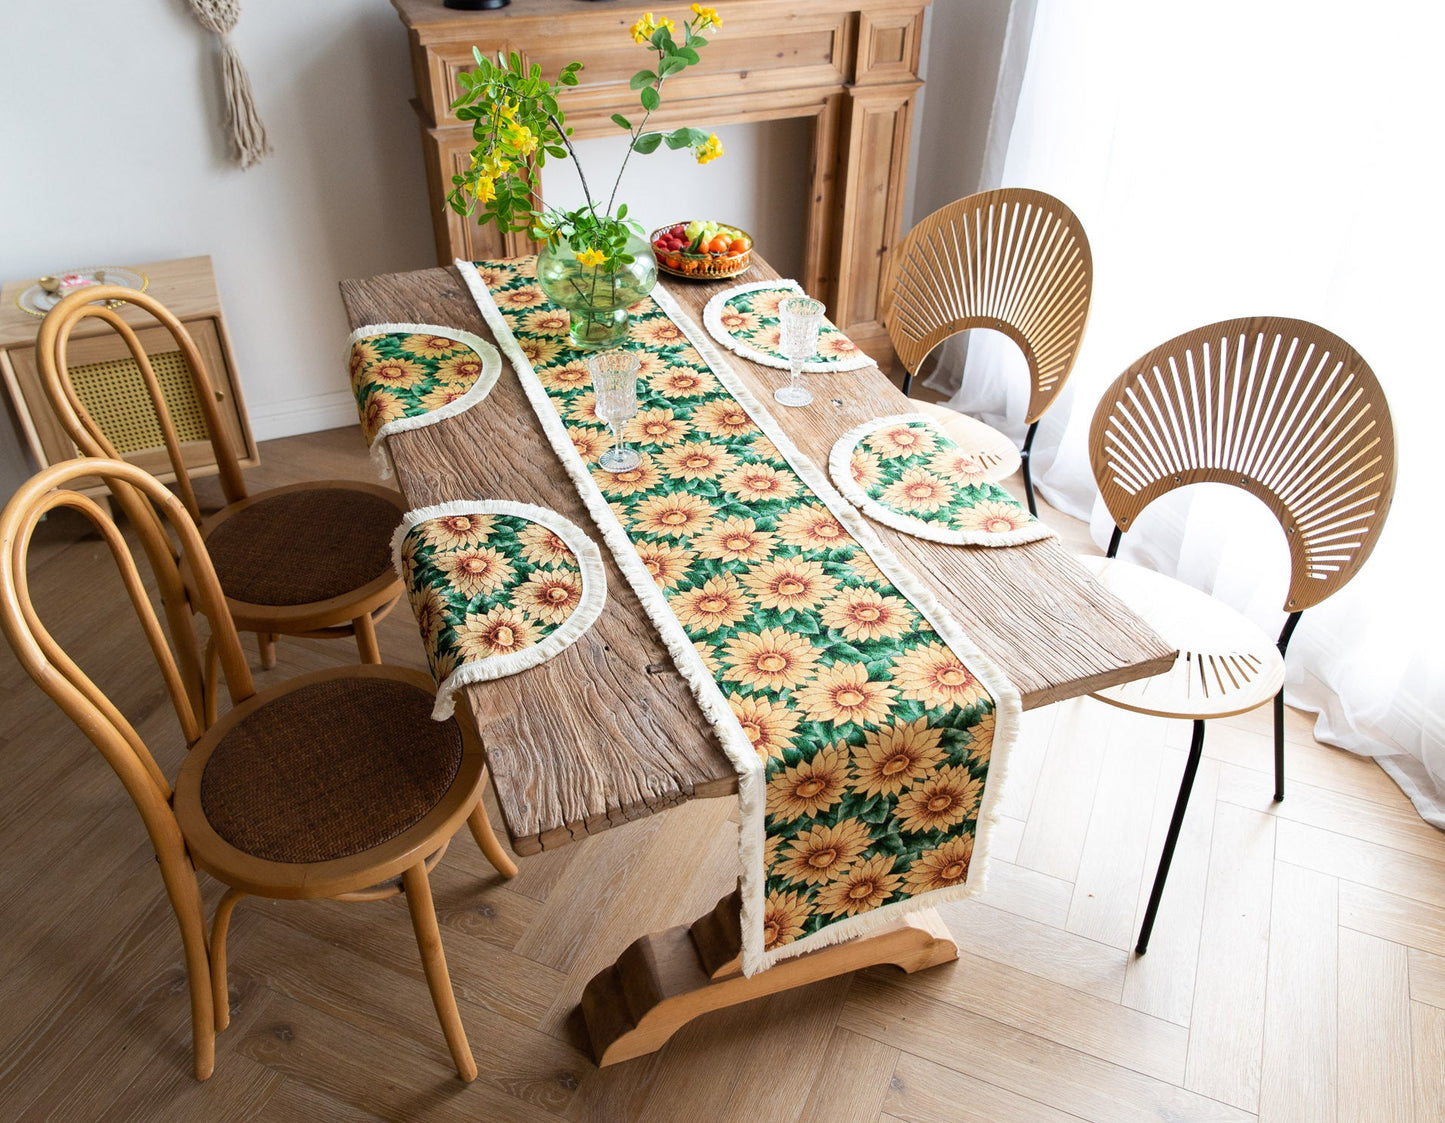 Vintage fringed dining room decorative tablecloth